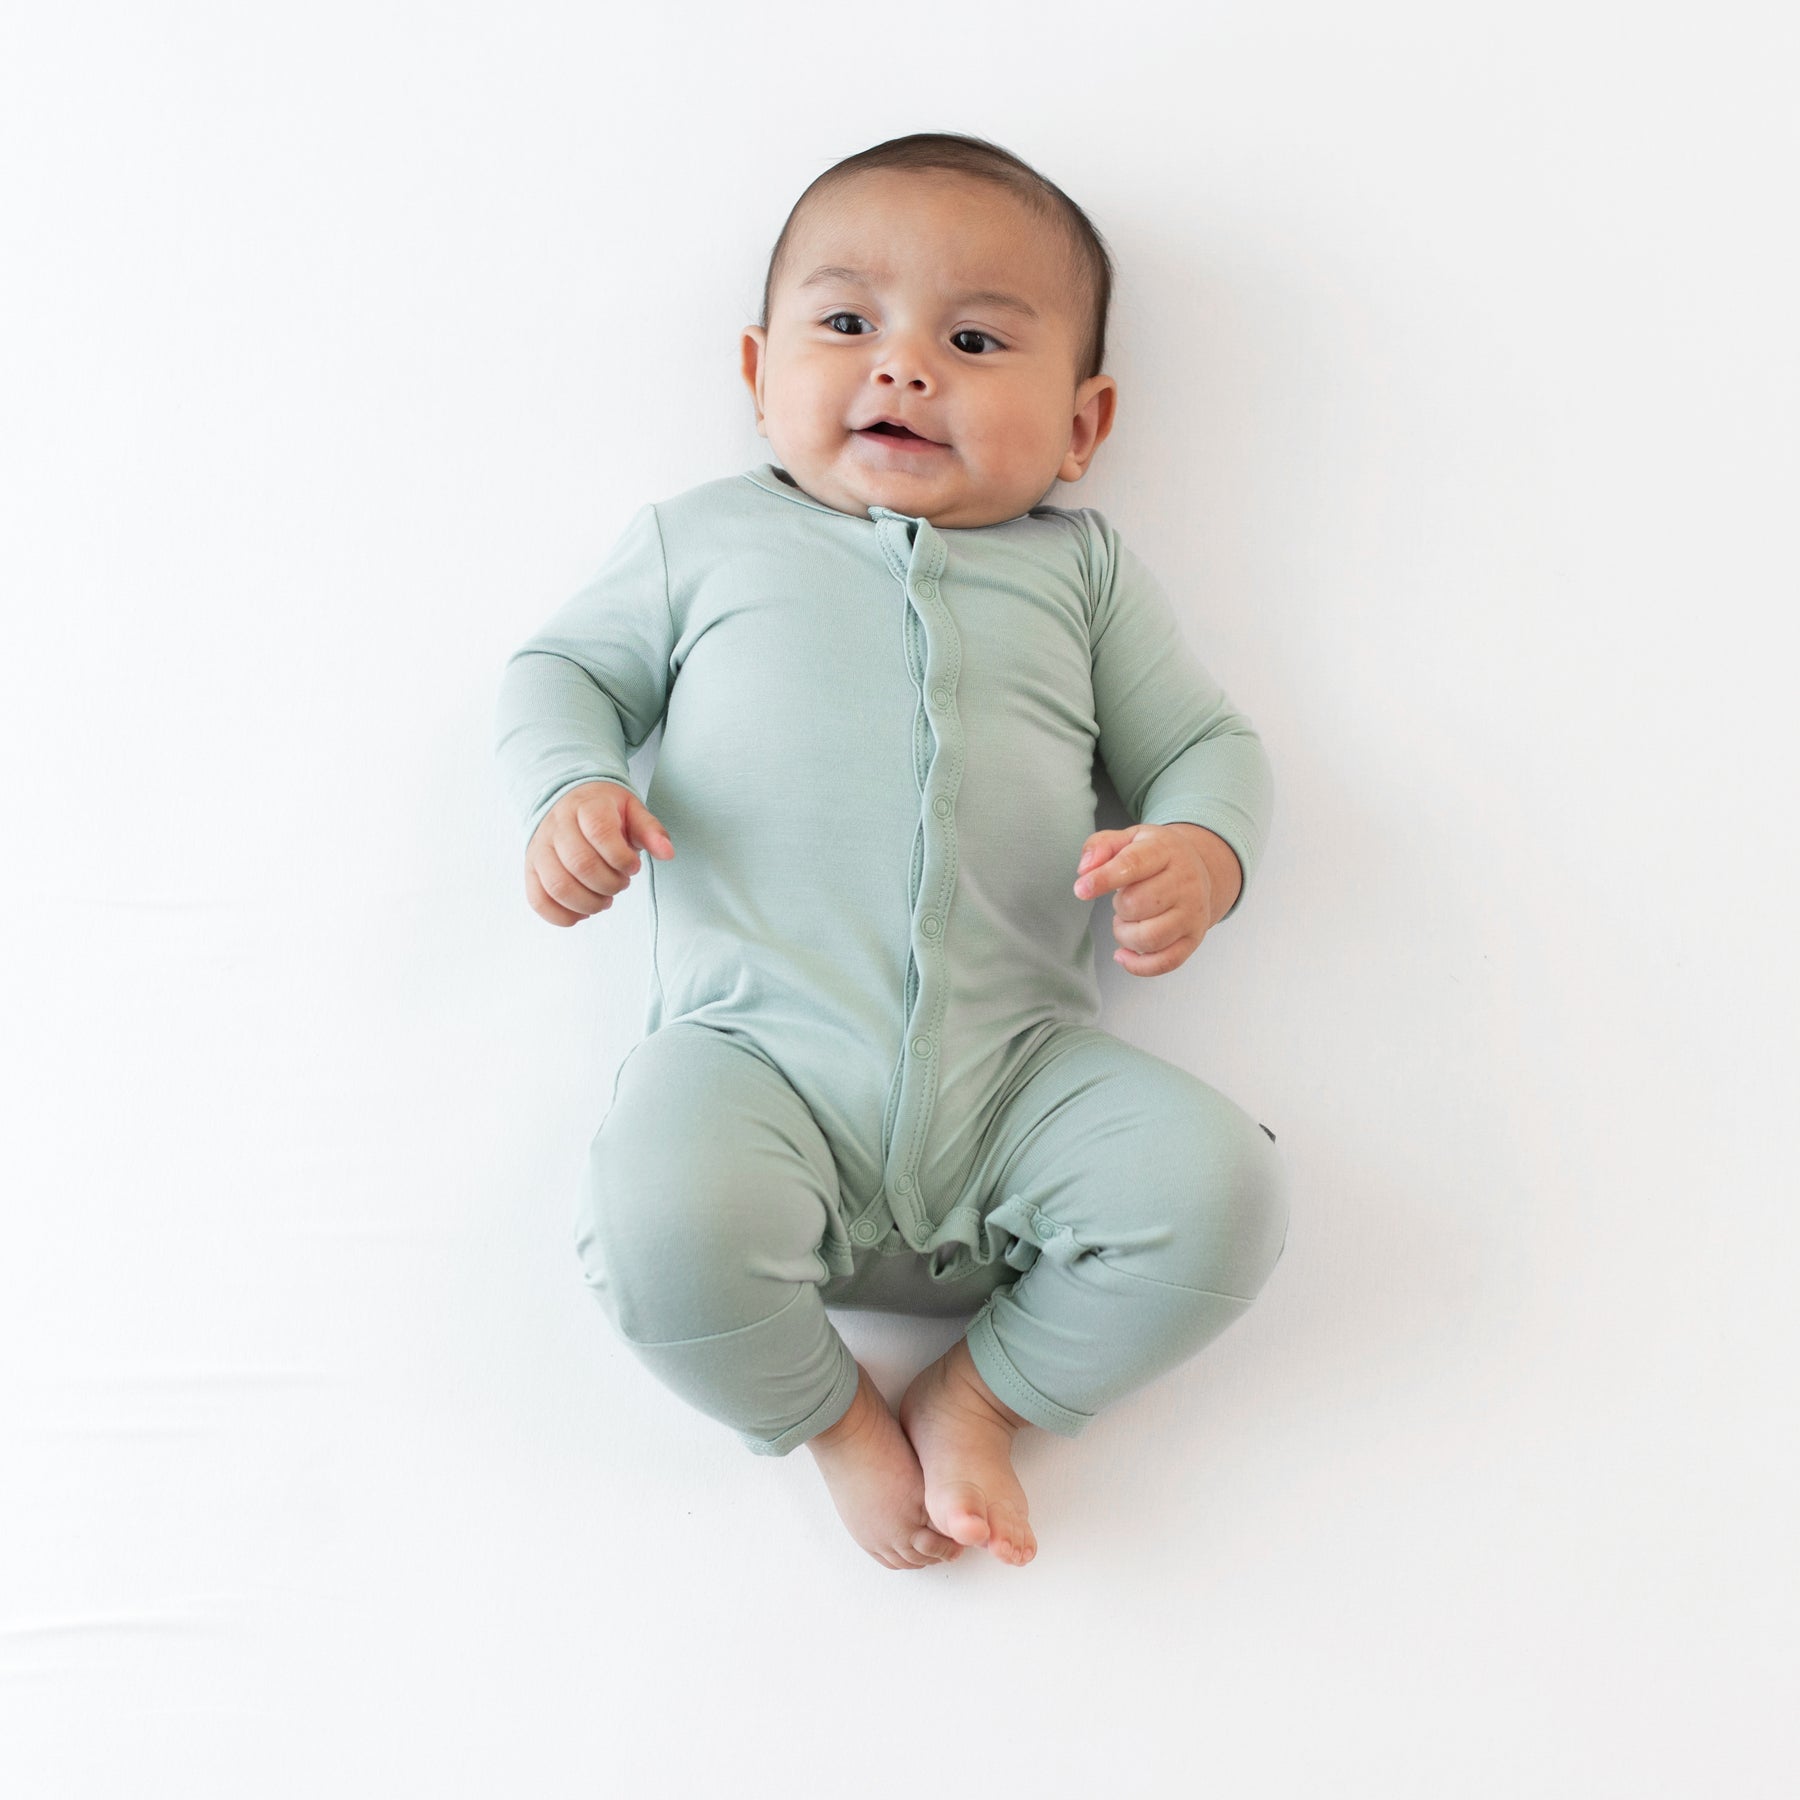 Infant wearing Kyte Baby Romper in Sage